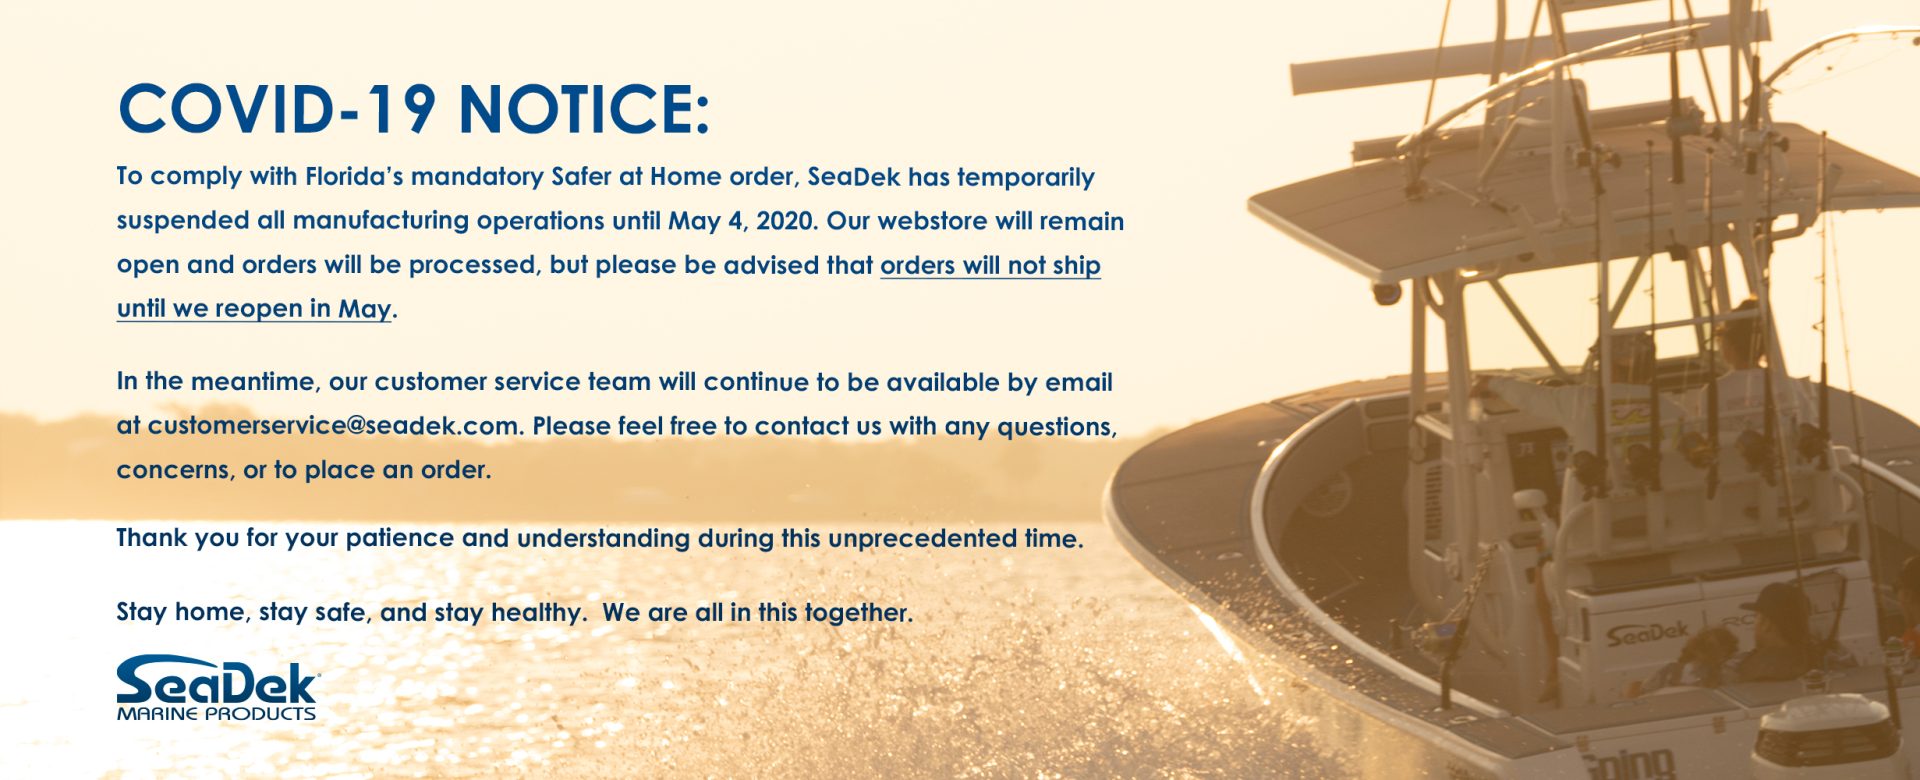 SeaDek COVID-19 Notice